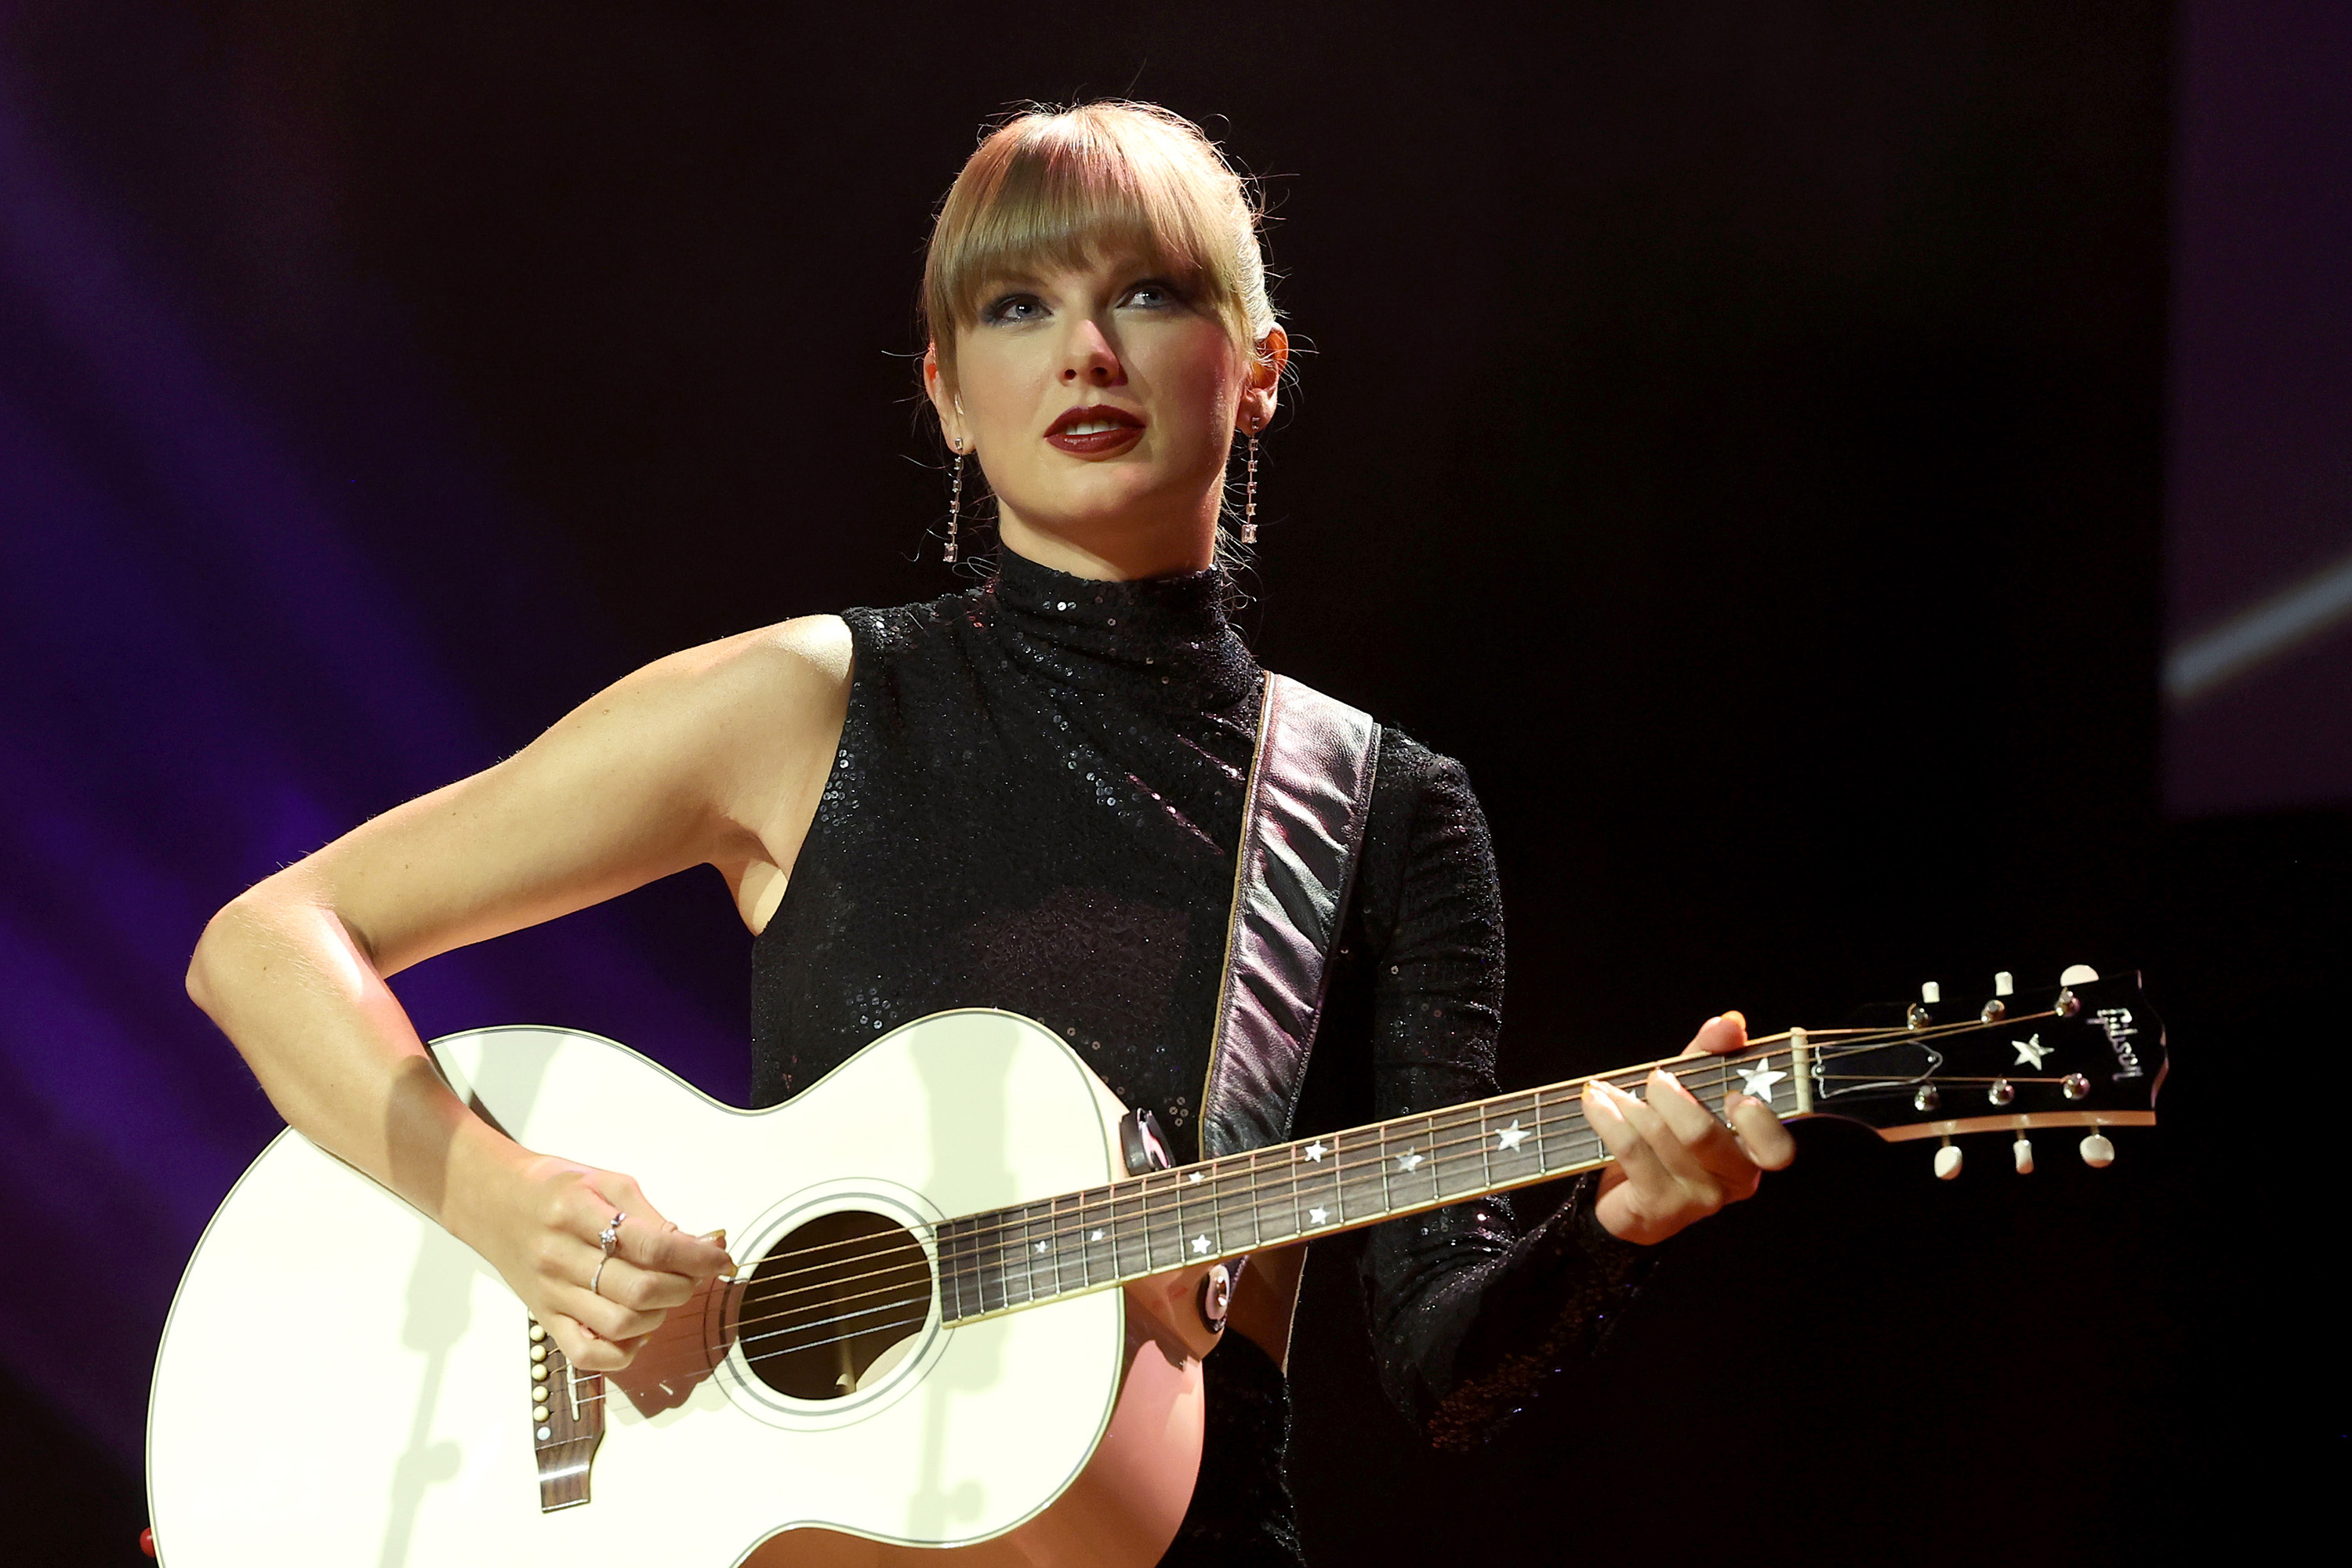 Bonds underwear takes brutal swipe at Taylor Swift over ticket